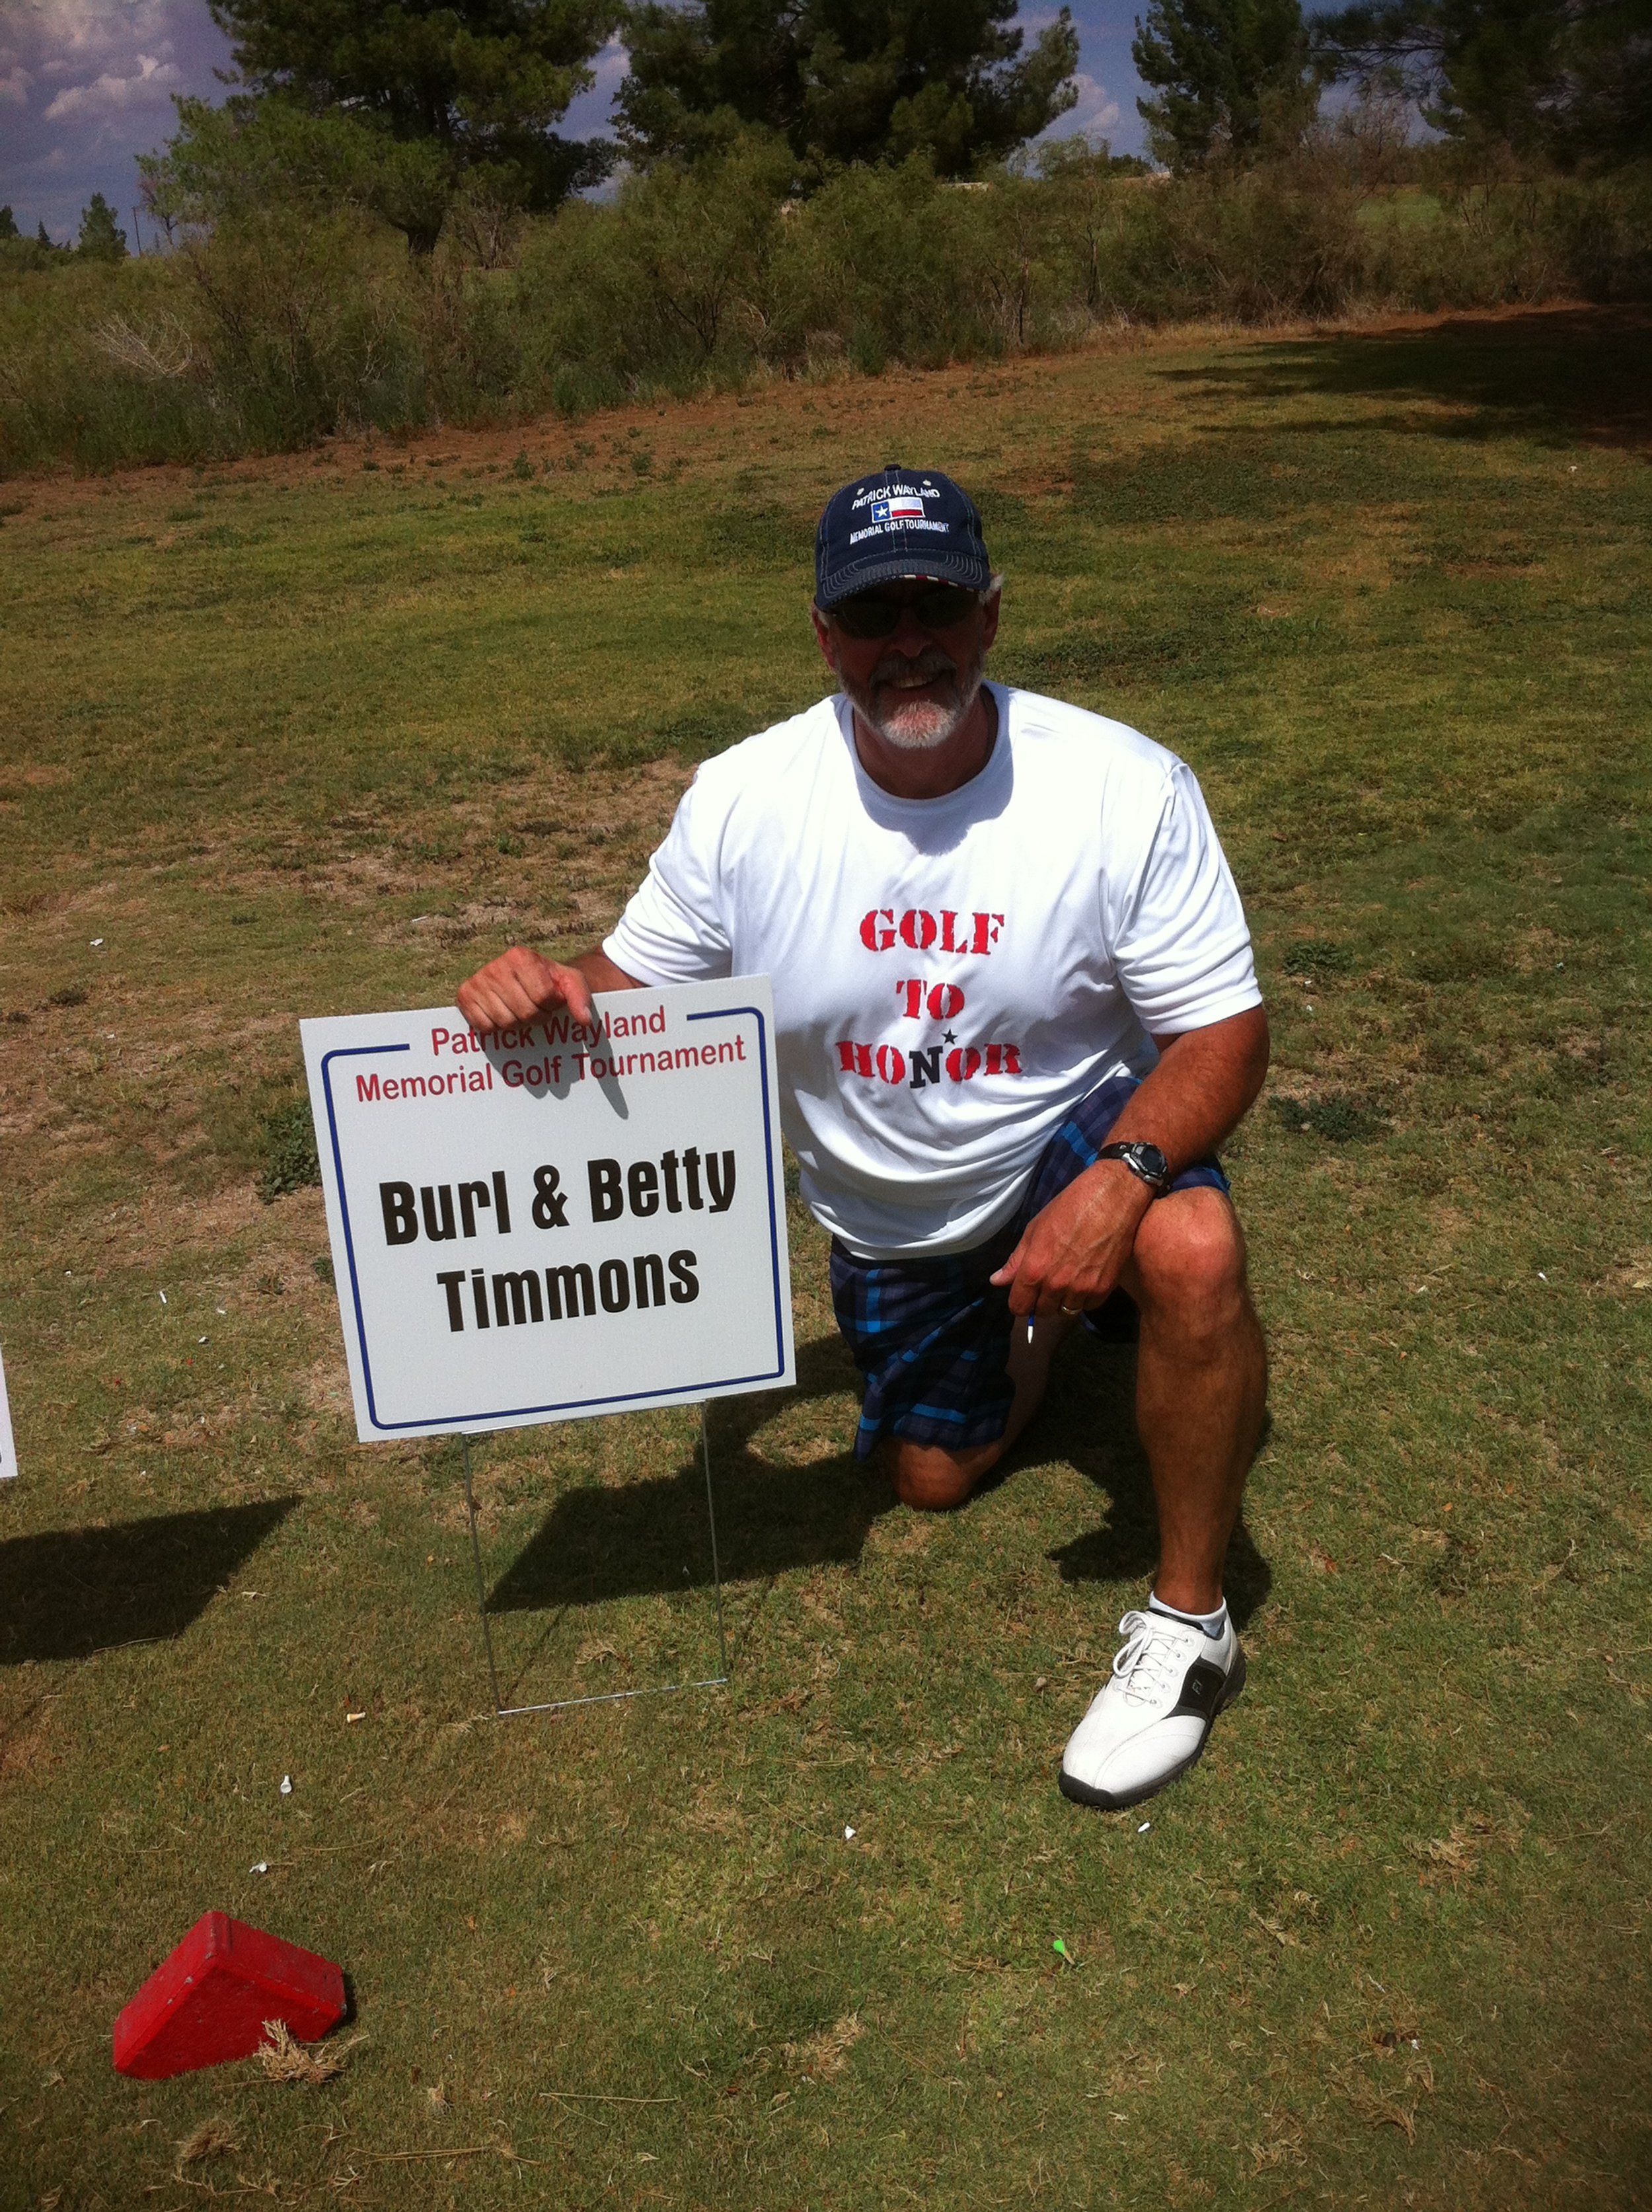 Patrick-Wayland-Memorial-Golf-to-Honor-Tournament-Midland-TexasIMG_8127.JPEG